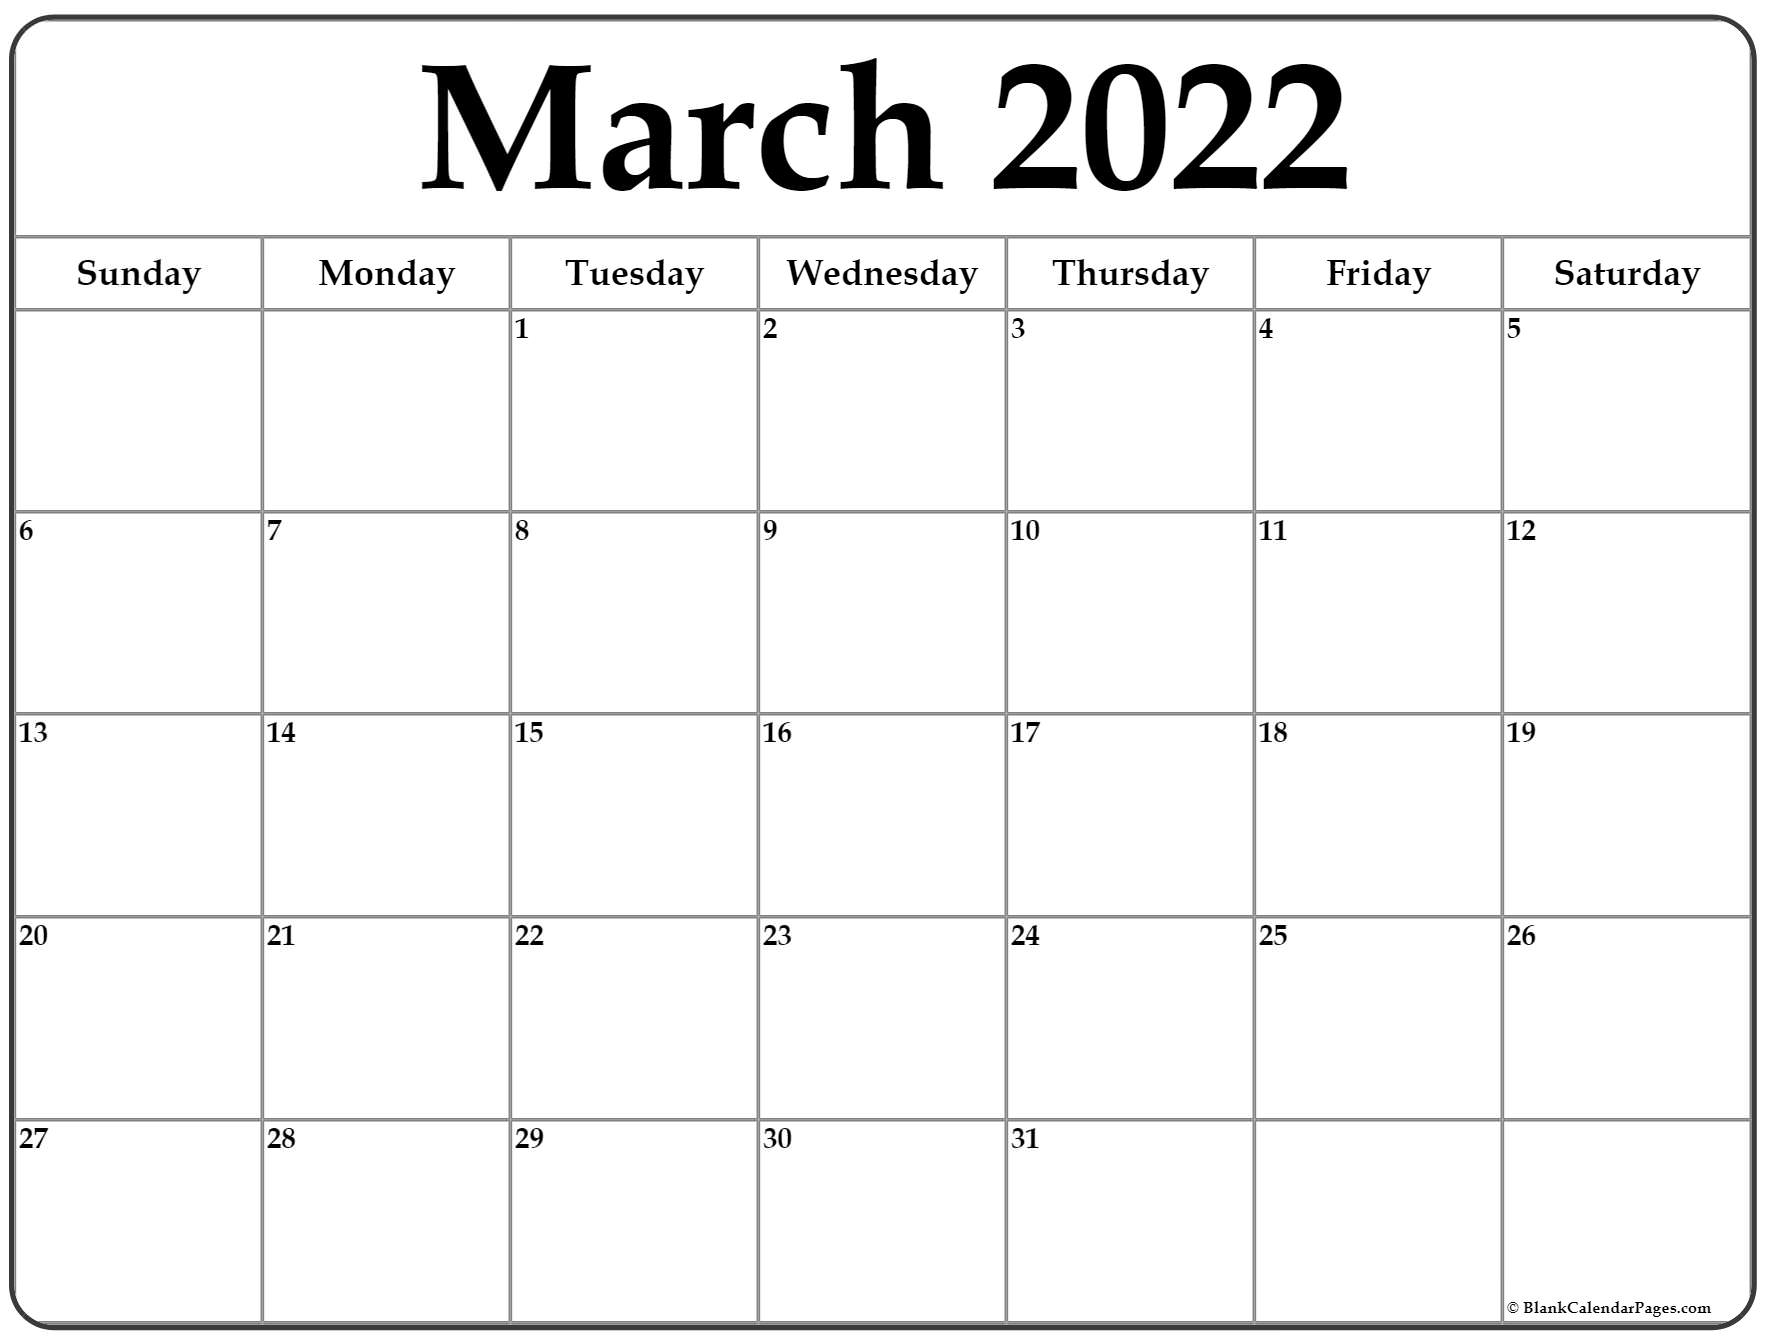 Get March 2022 Calendar In Kannada